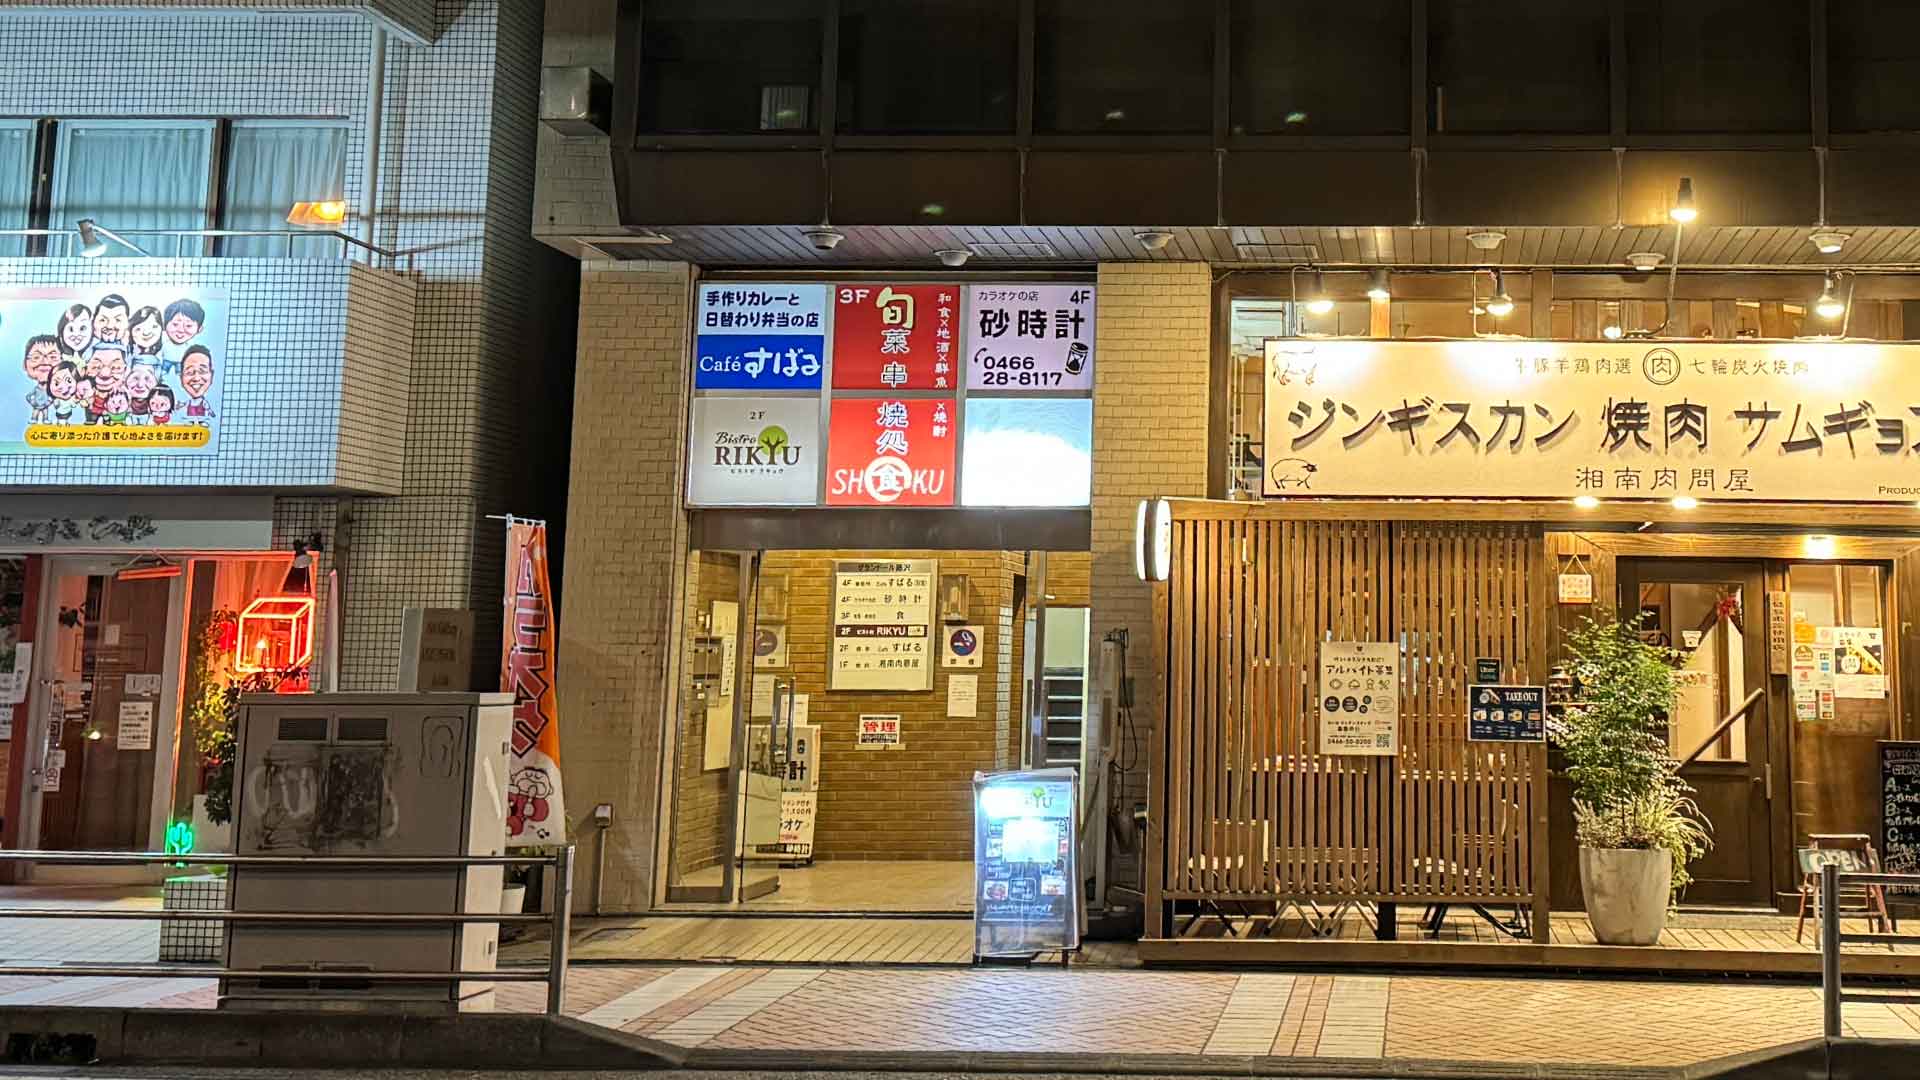 Bistro RIKYU 昆虫食フルコース 2階 看板 神奈川藤沢